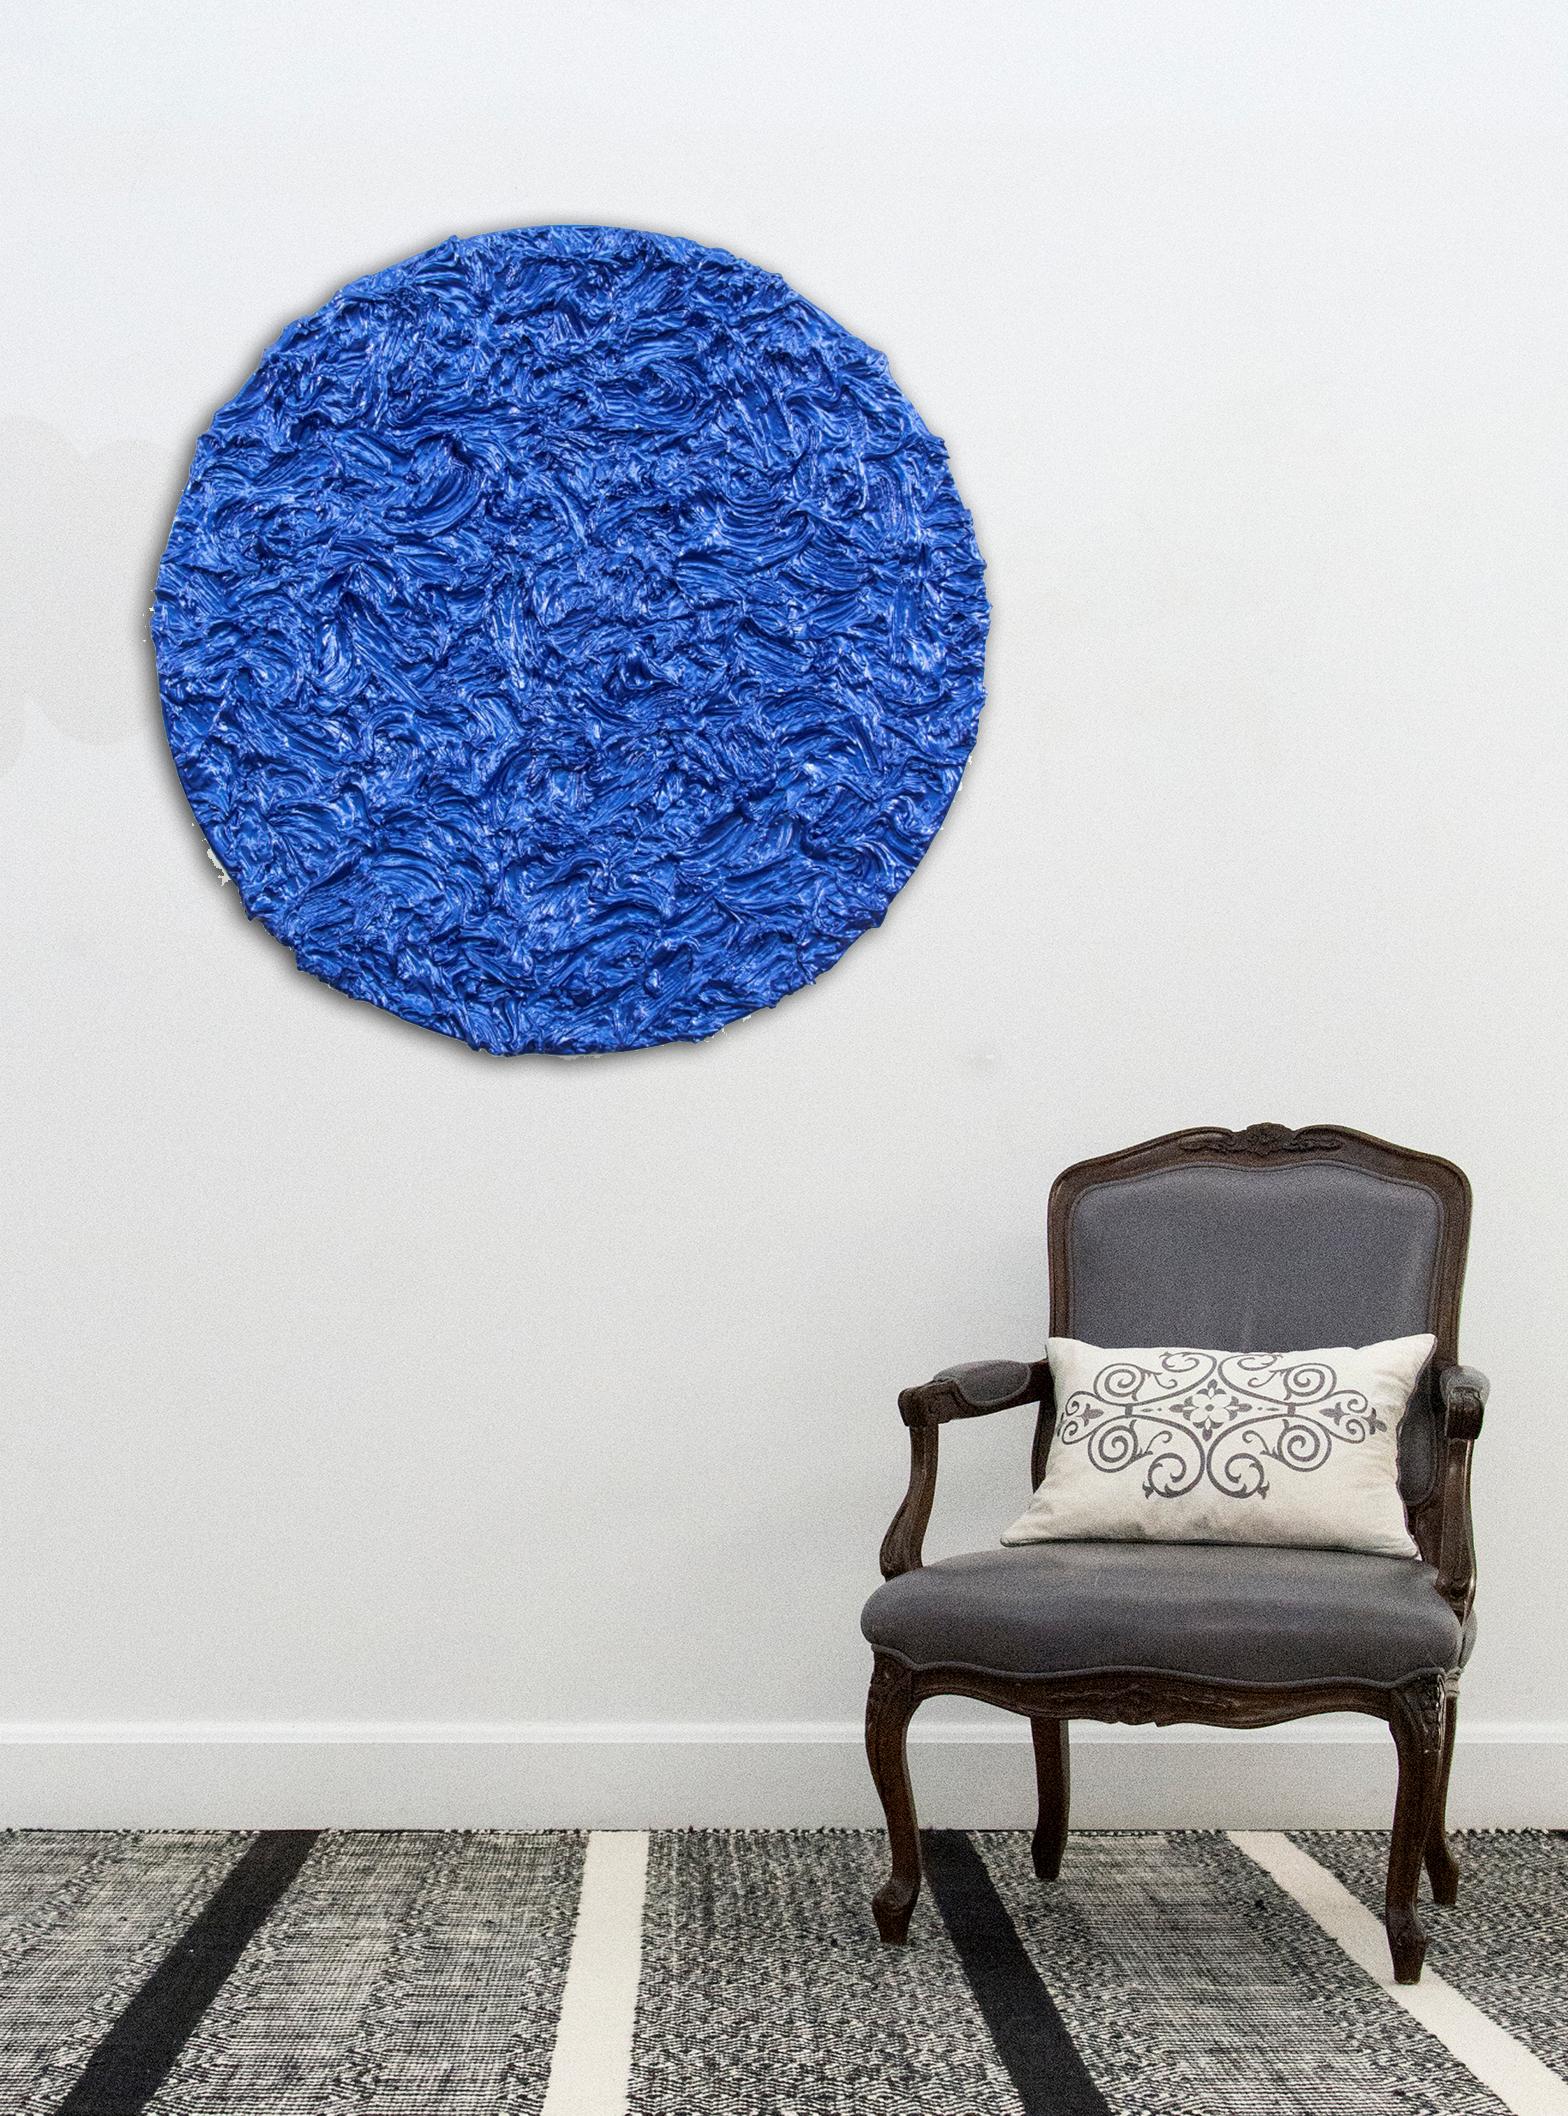 Storm Surge Tondo Cobalt - glossy, blue, impasto, abstract, acrylic on aluminum - Contemporary Painting by Shayne Dark